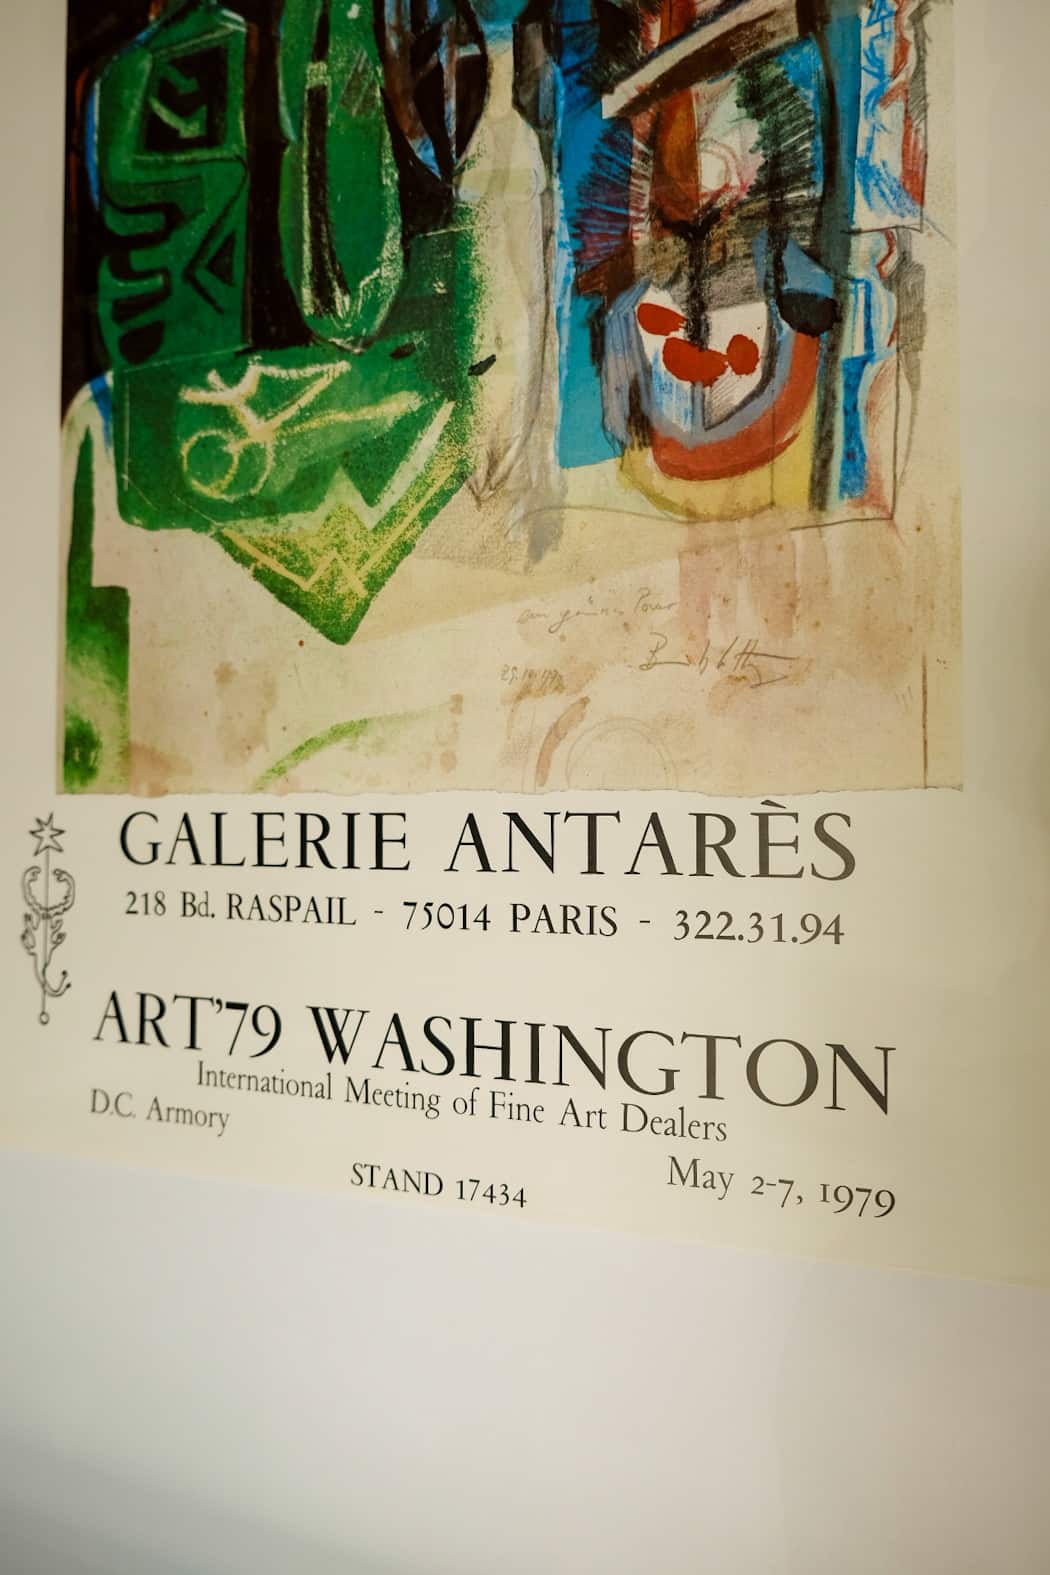 Karl Brandstaetter Galerie Antares 1979 Exhibition Print